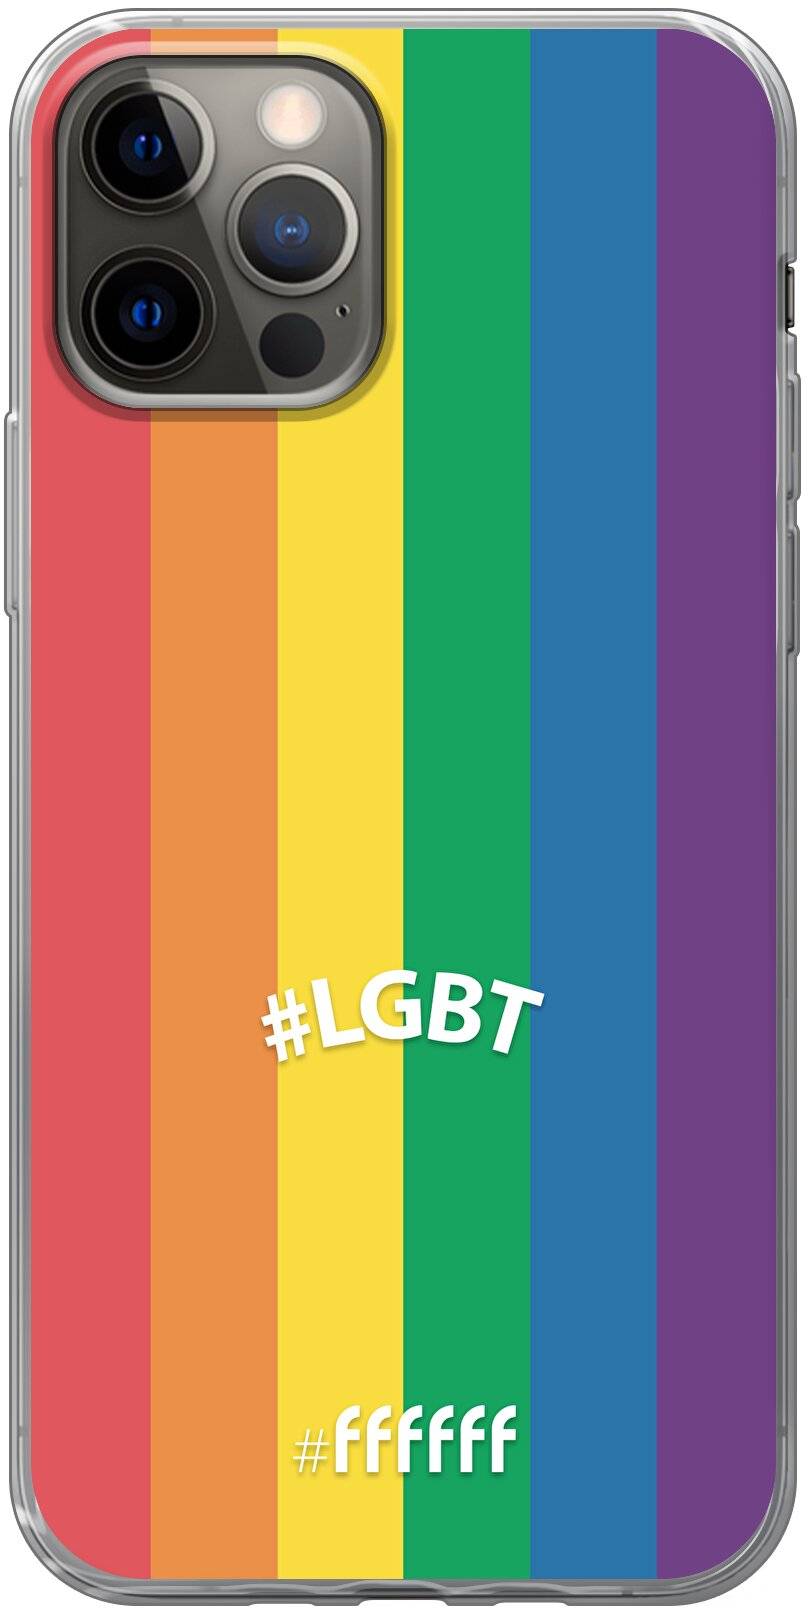 #LGBT - #LGBT iPhone 12